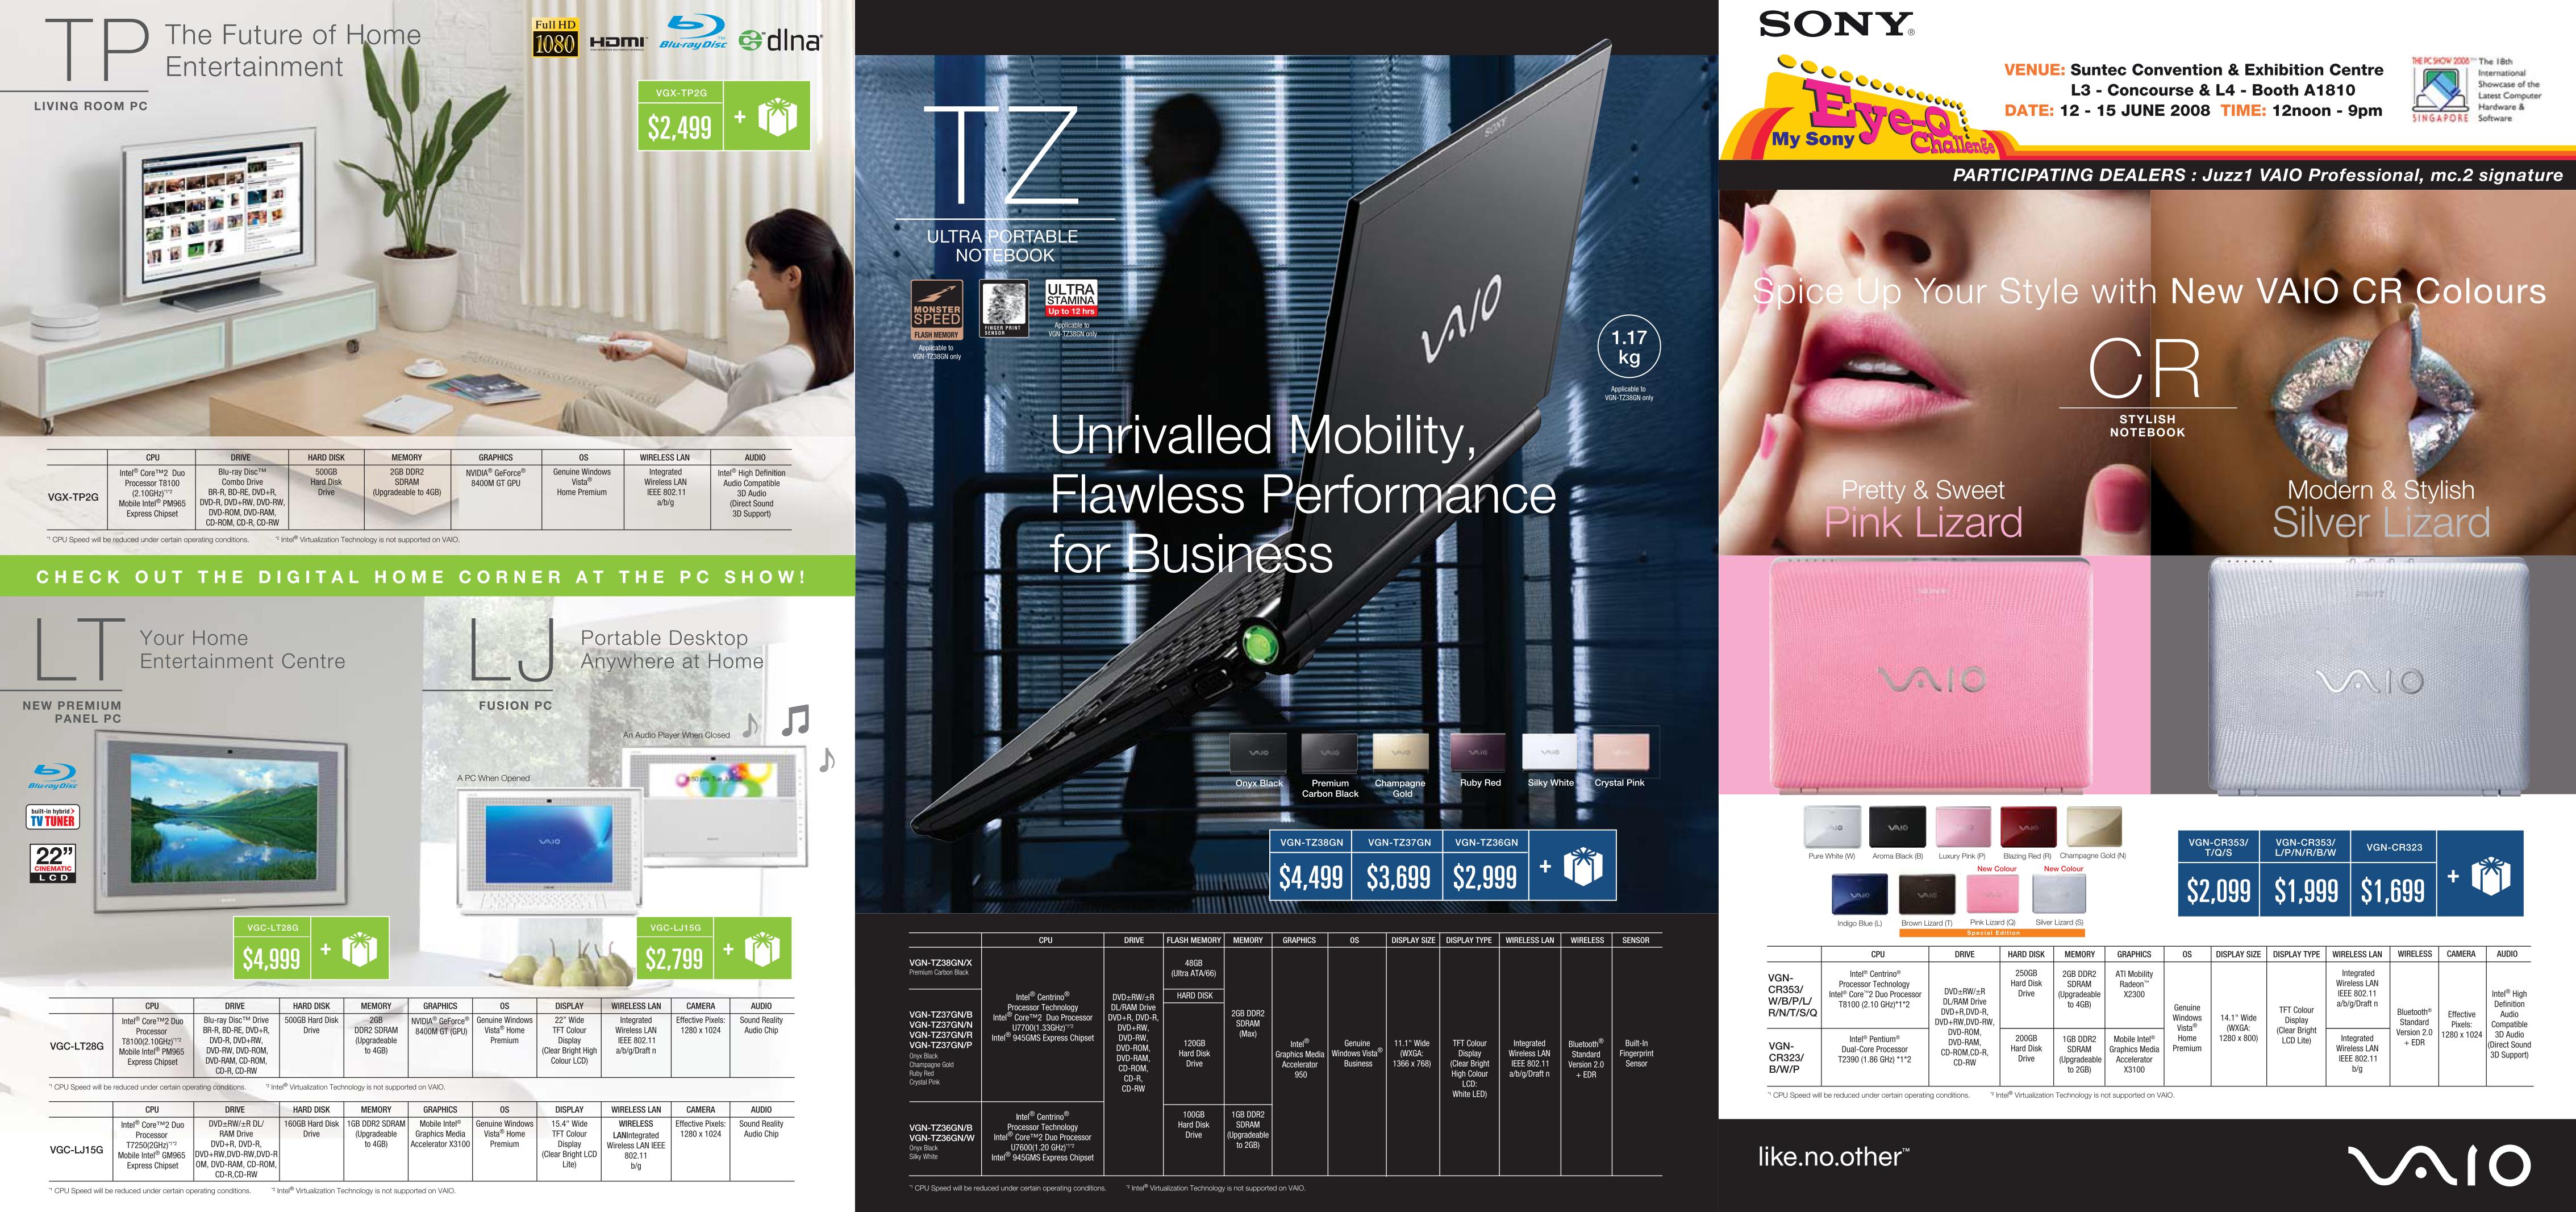 PC Show 2008 price list image brochure of Sony Vaio.pdf 02